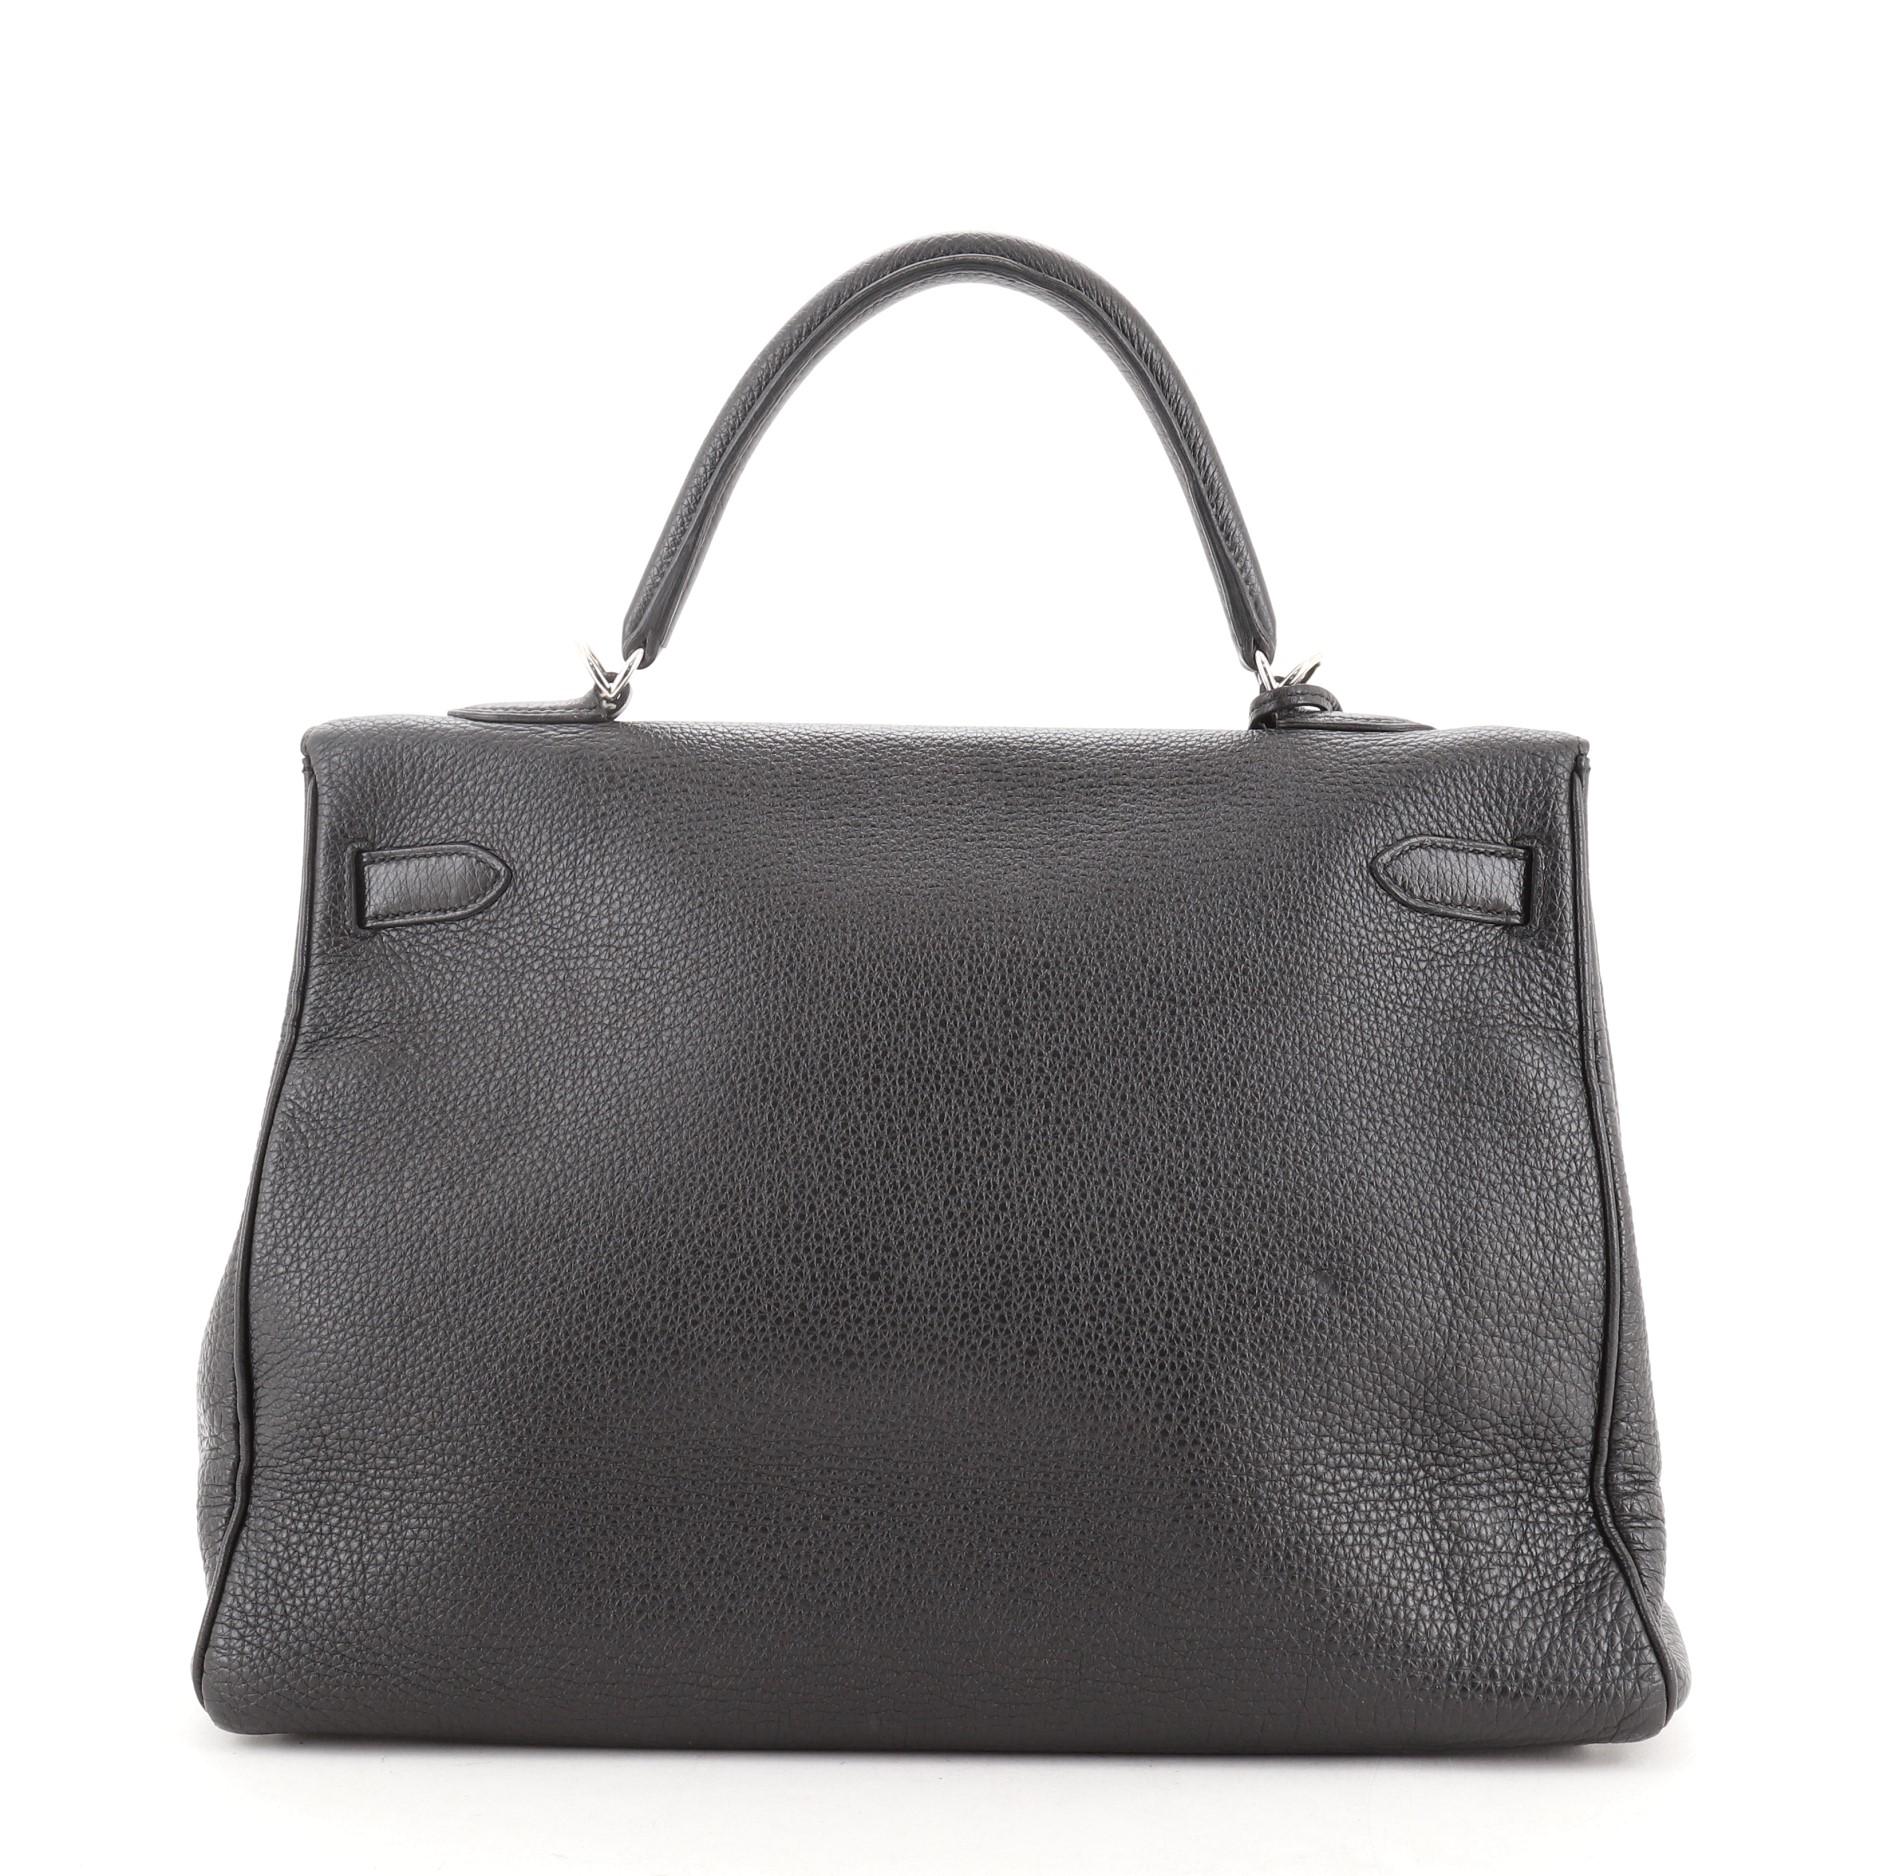 Black Hermes Kelly Handbag Noir Togo with Palladium Hardware 35